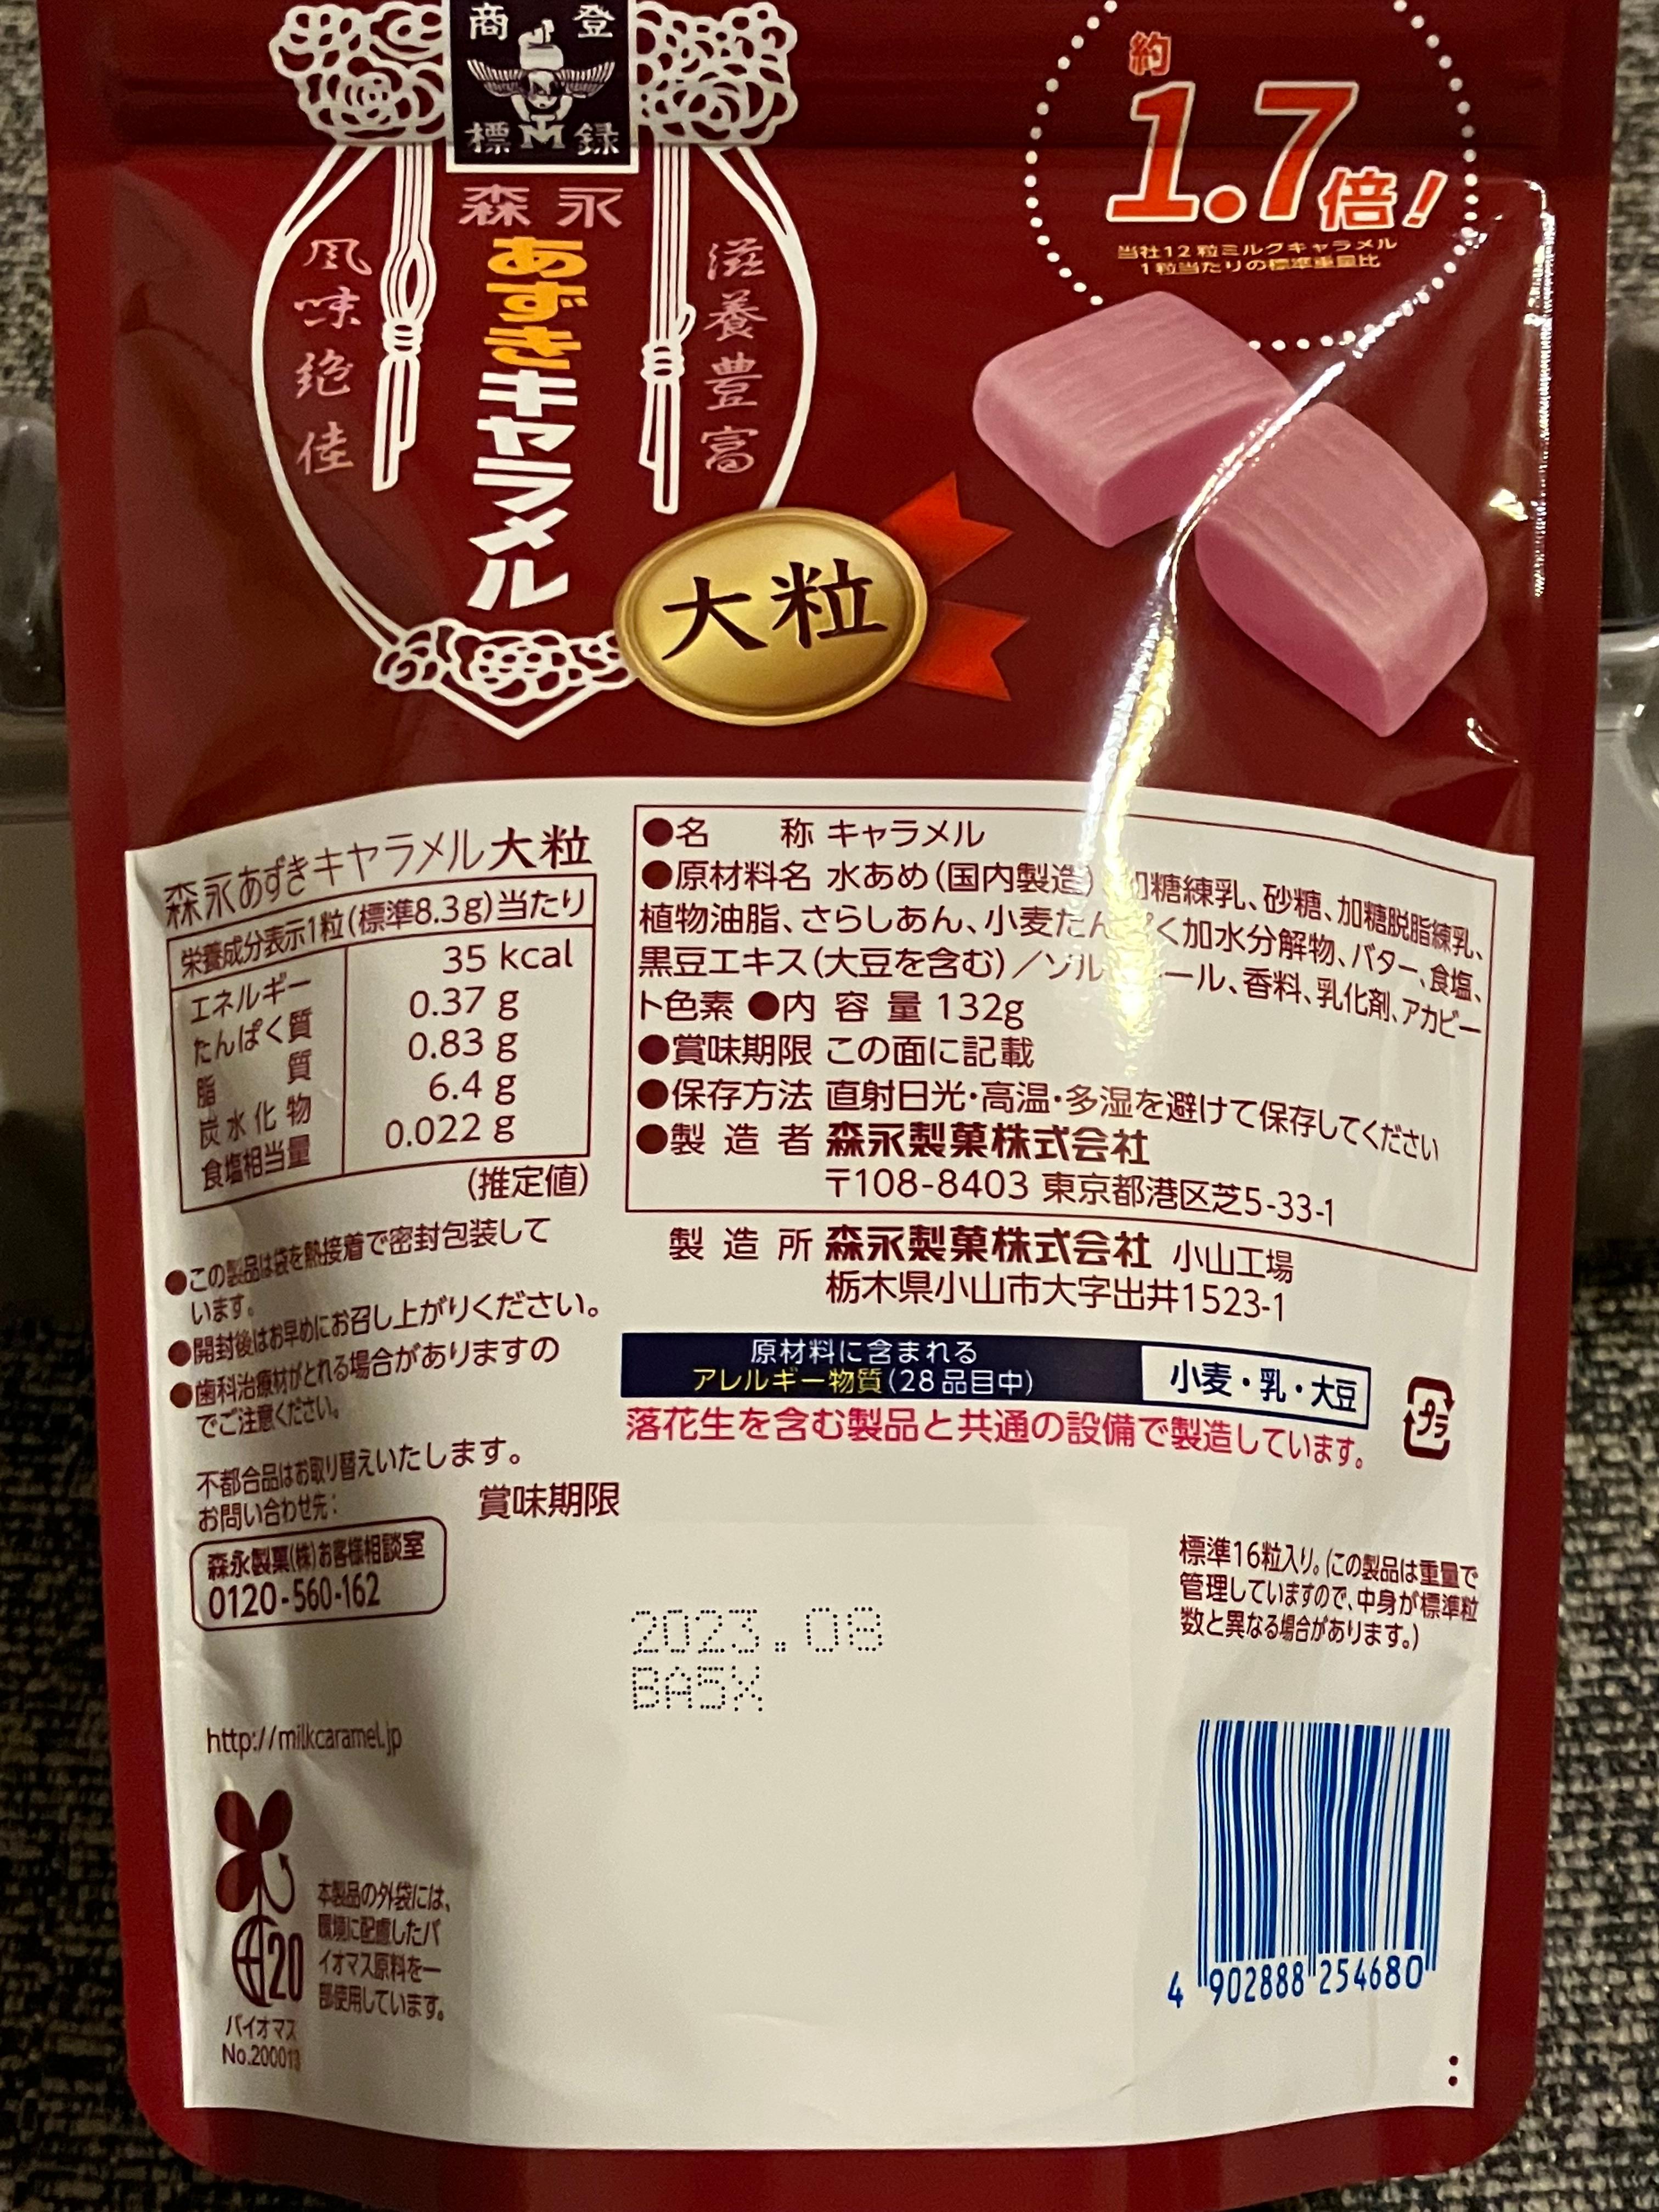 LOHACO - あずきキャラメル大粒 2袋 森永製菓